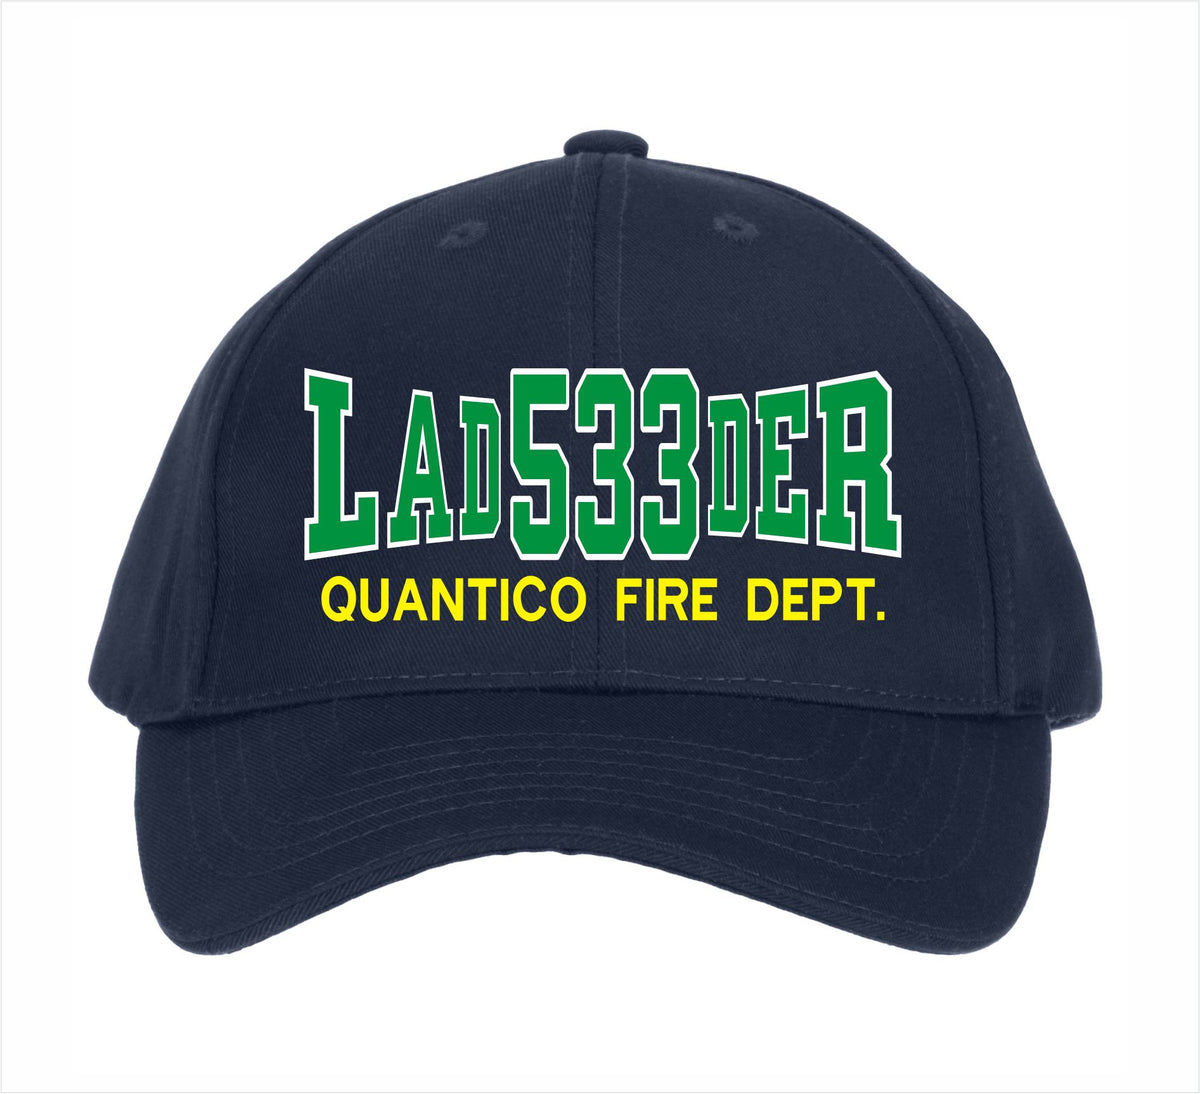 Ladder 533 Quantico Embroidered Hat